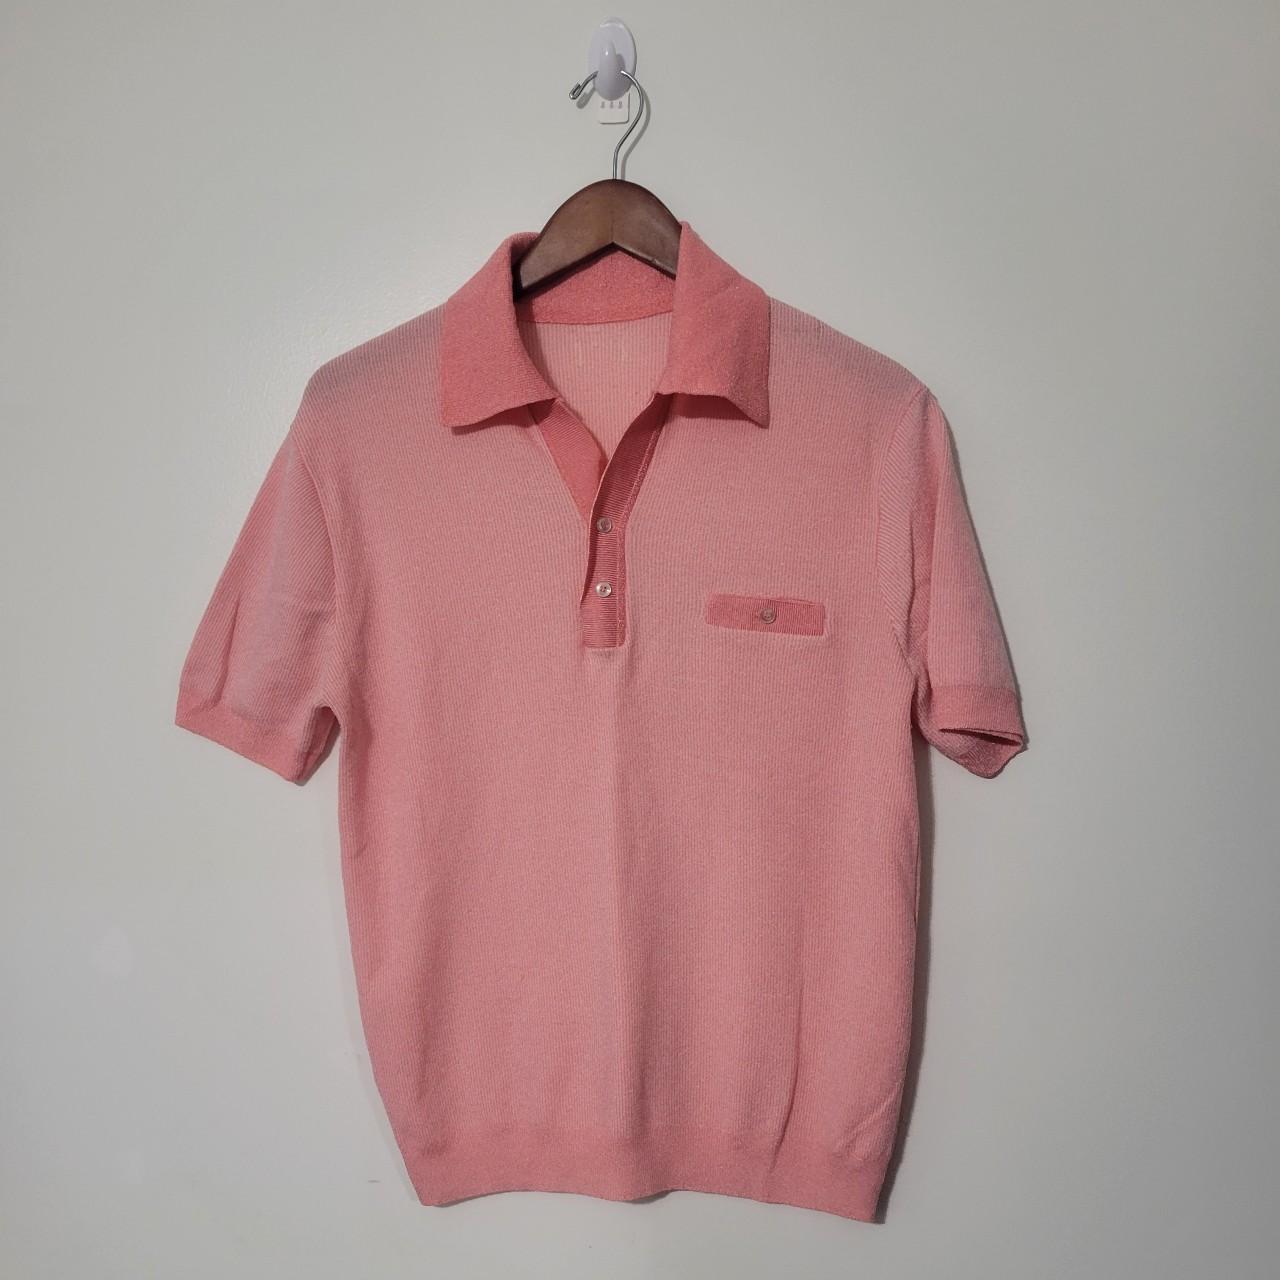 Vintage 90's Men's Pocket Shirt Size MEDIUM | Pin... - Depop